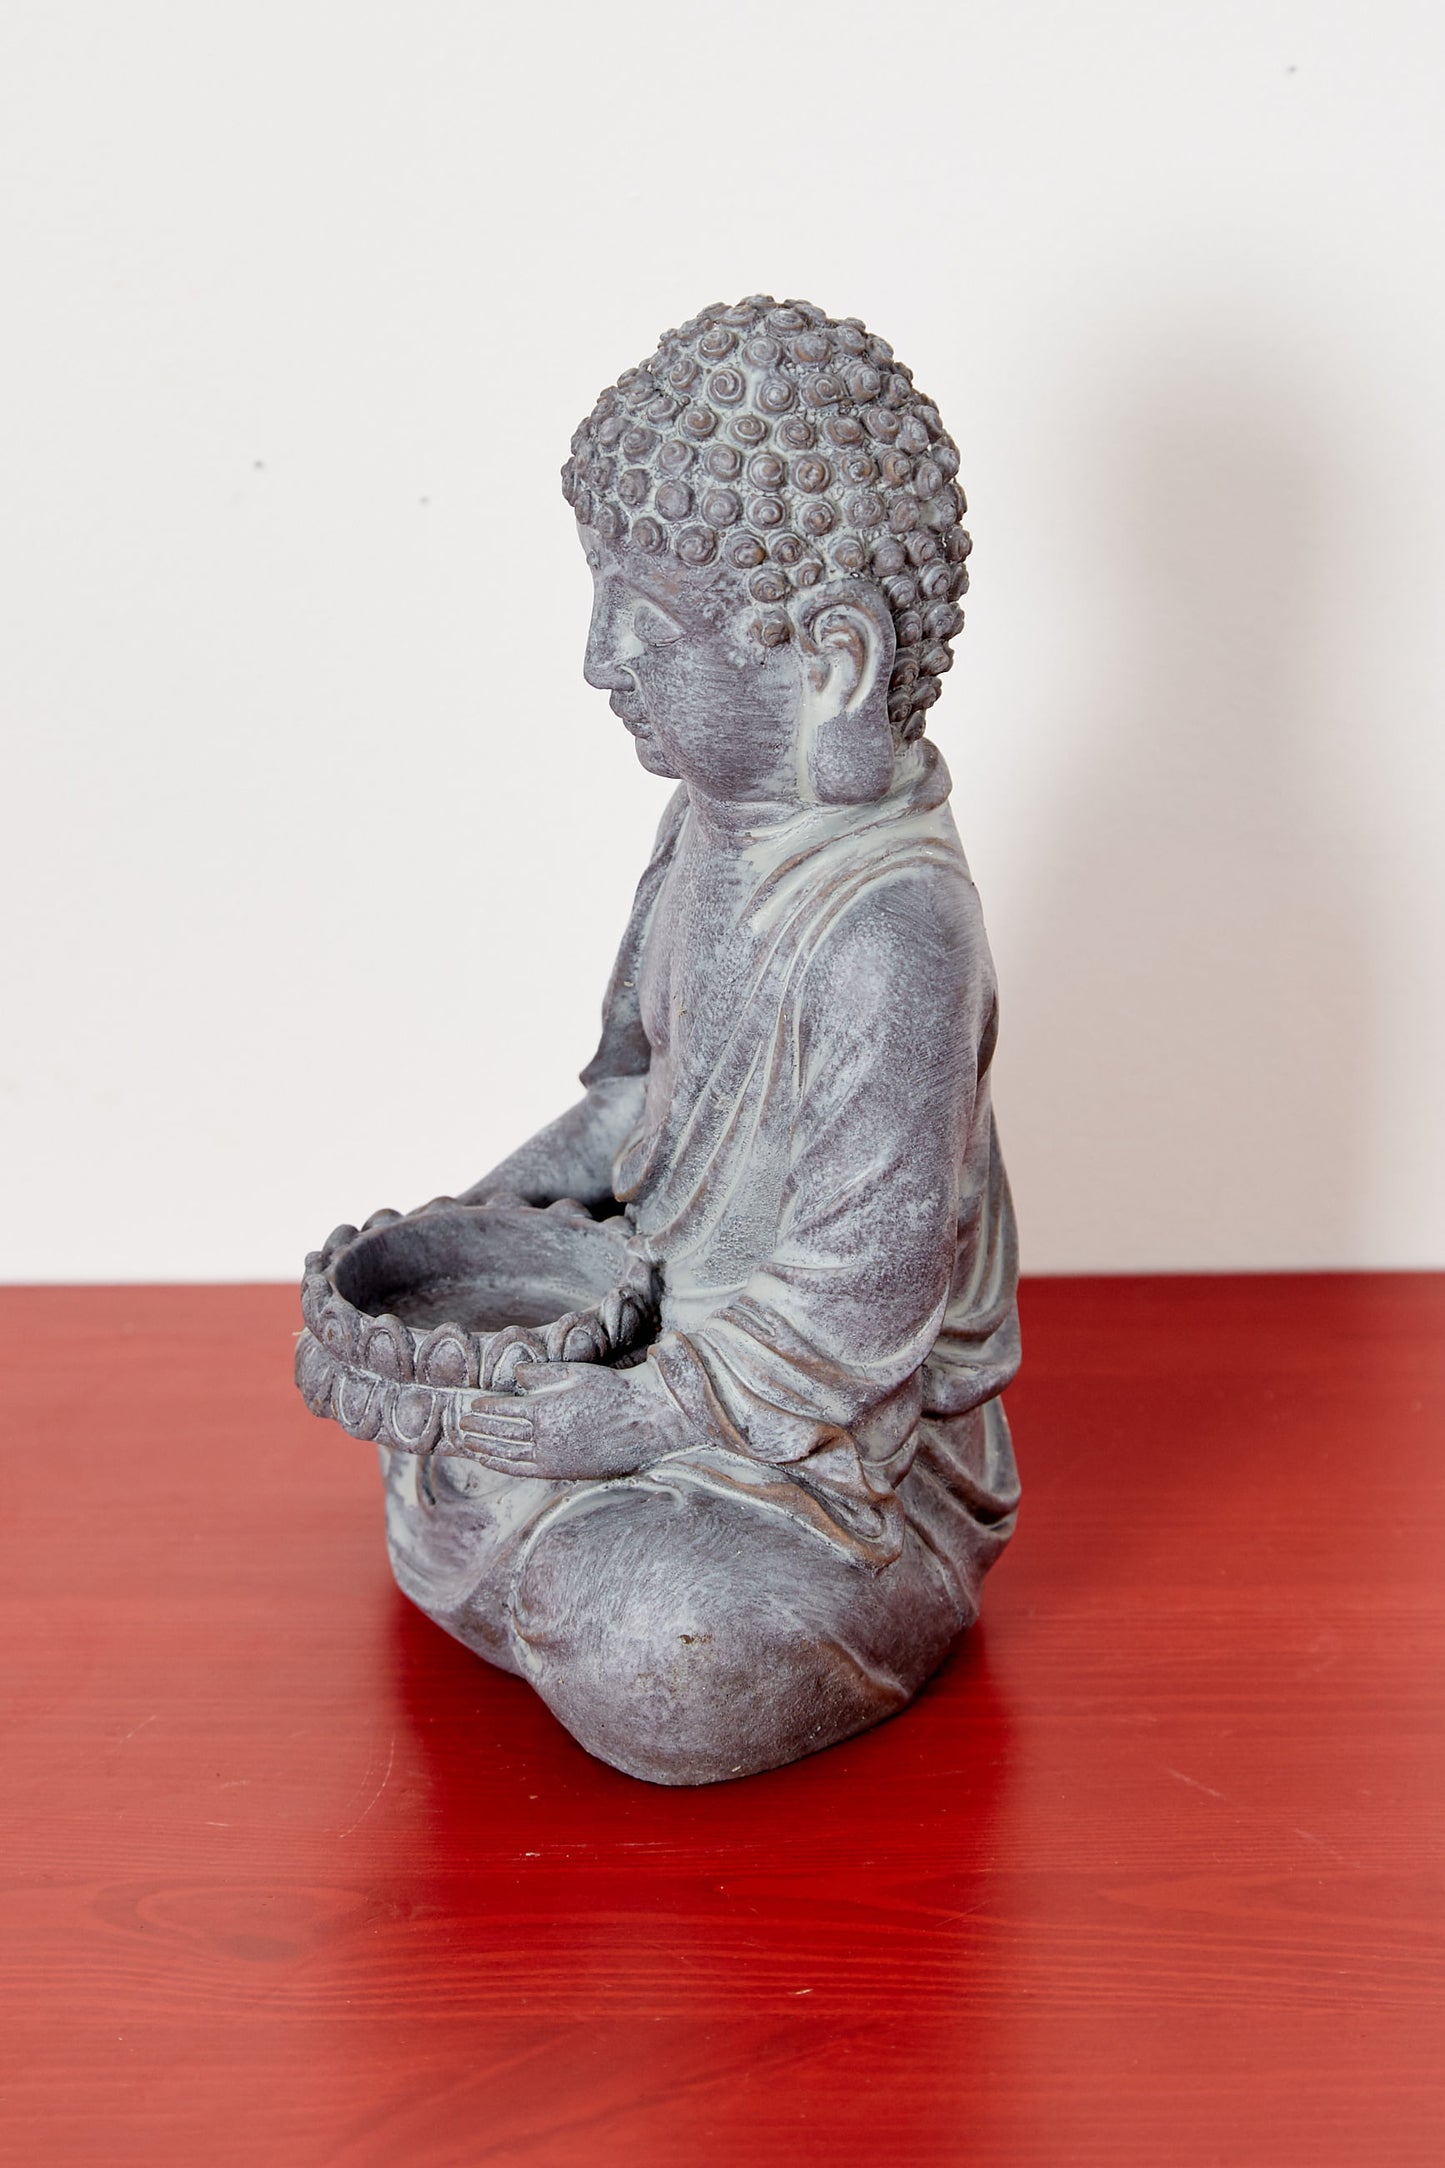 Buddha Tealight Holder